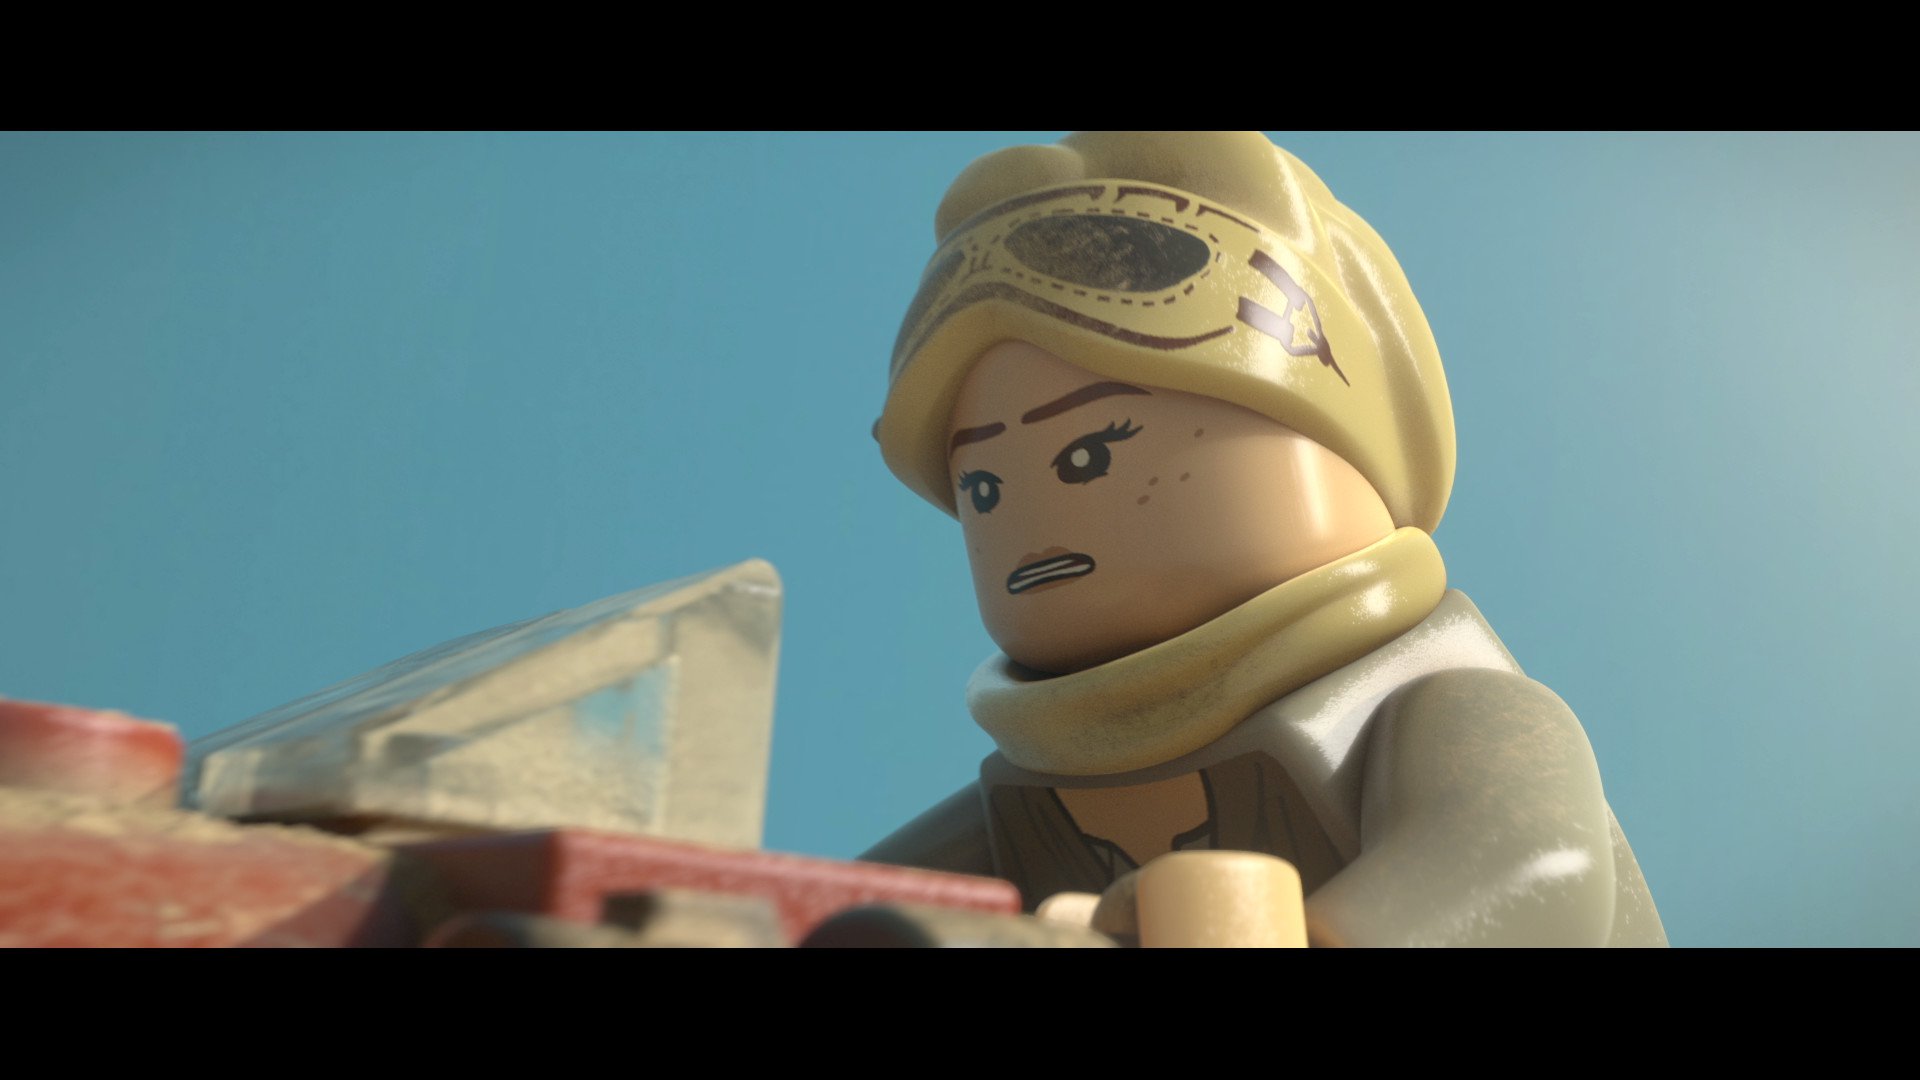 LEGO Star Wars The Force Awakens 15